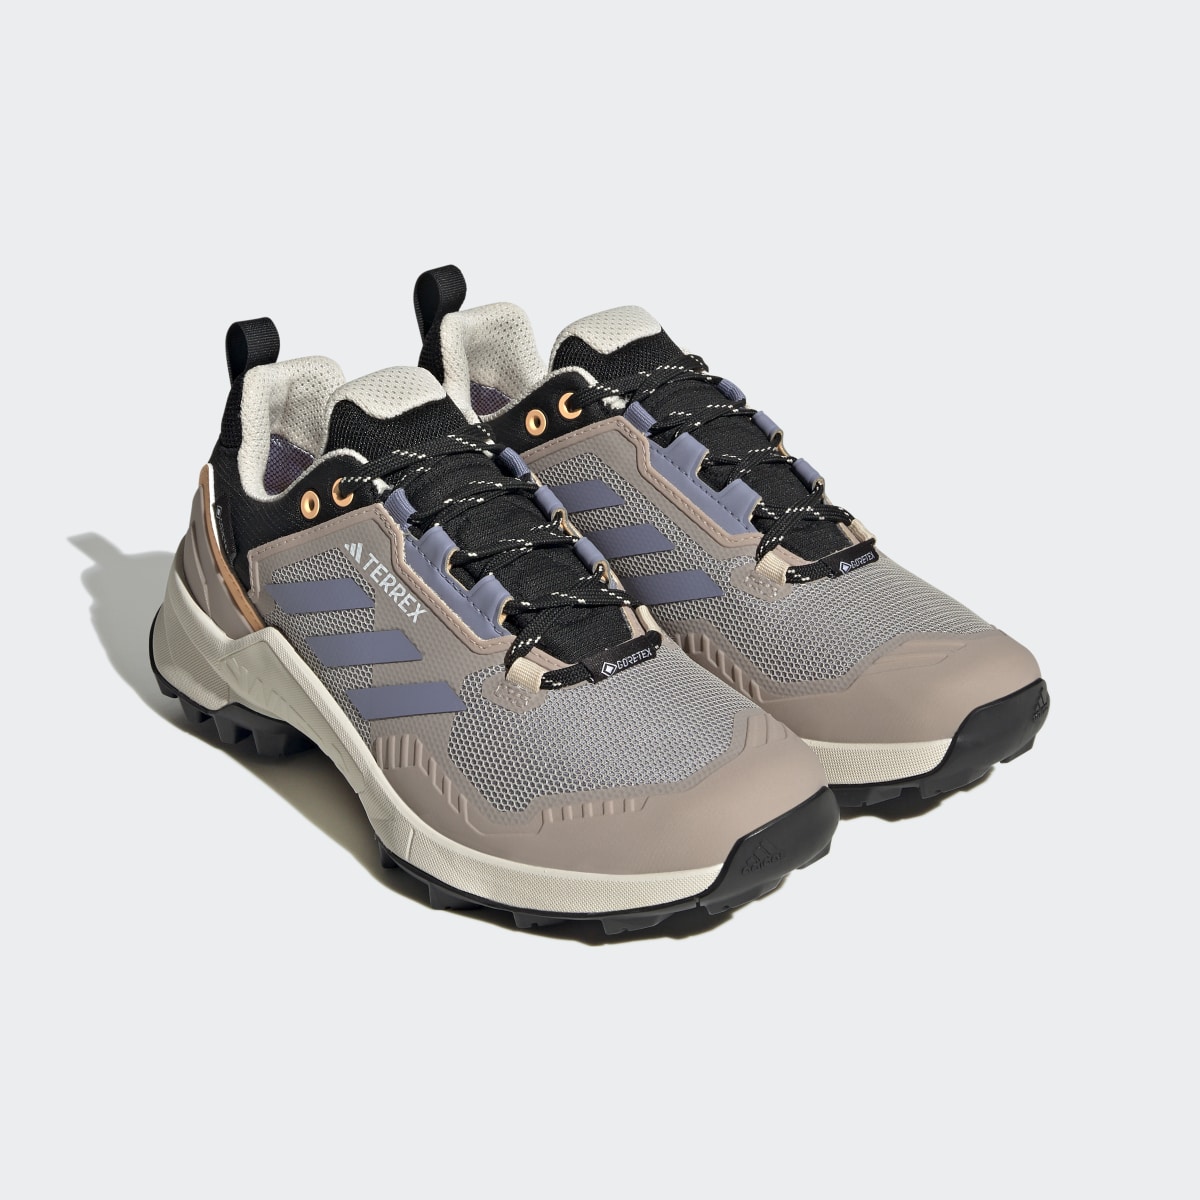 Adidas TERREX Swift R3 GORE-TEX Hiking Shoes. 5